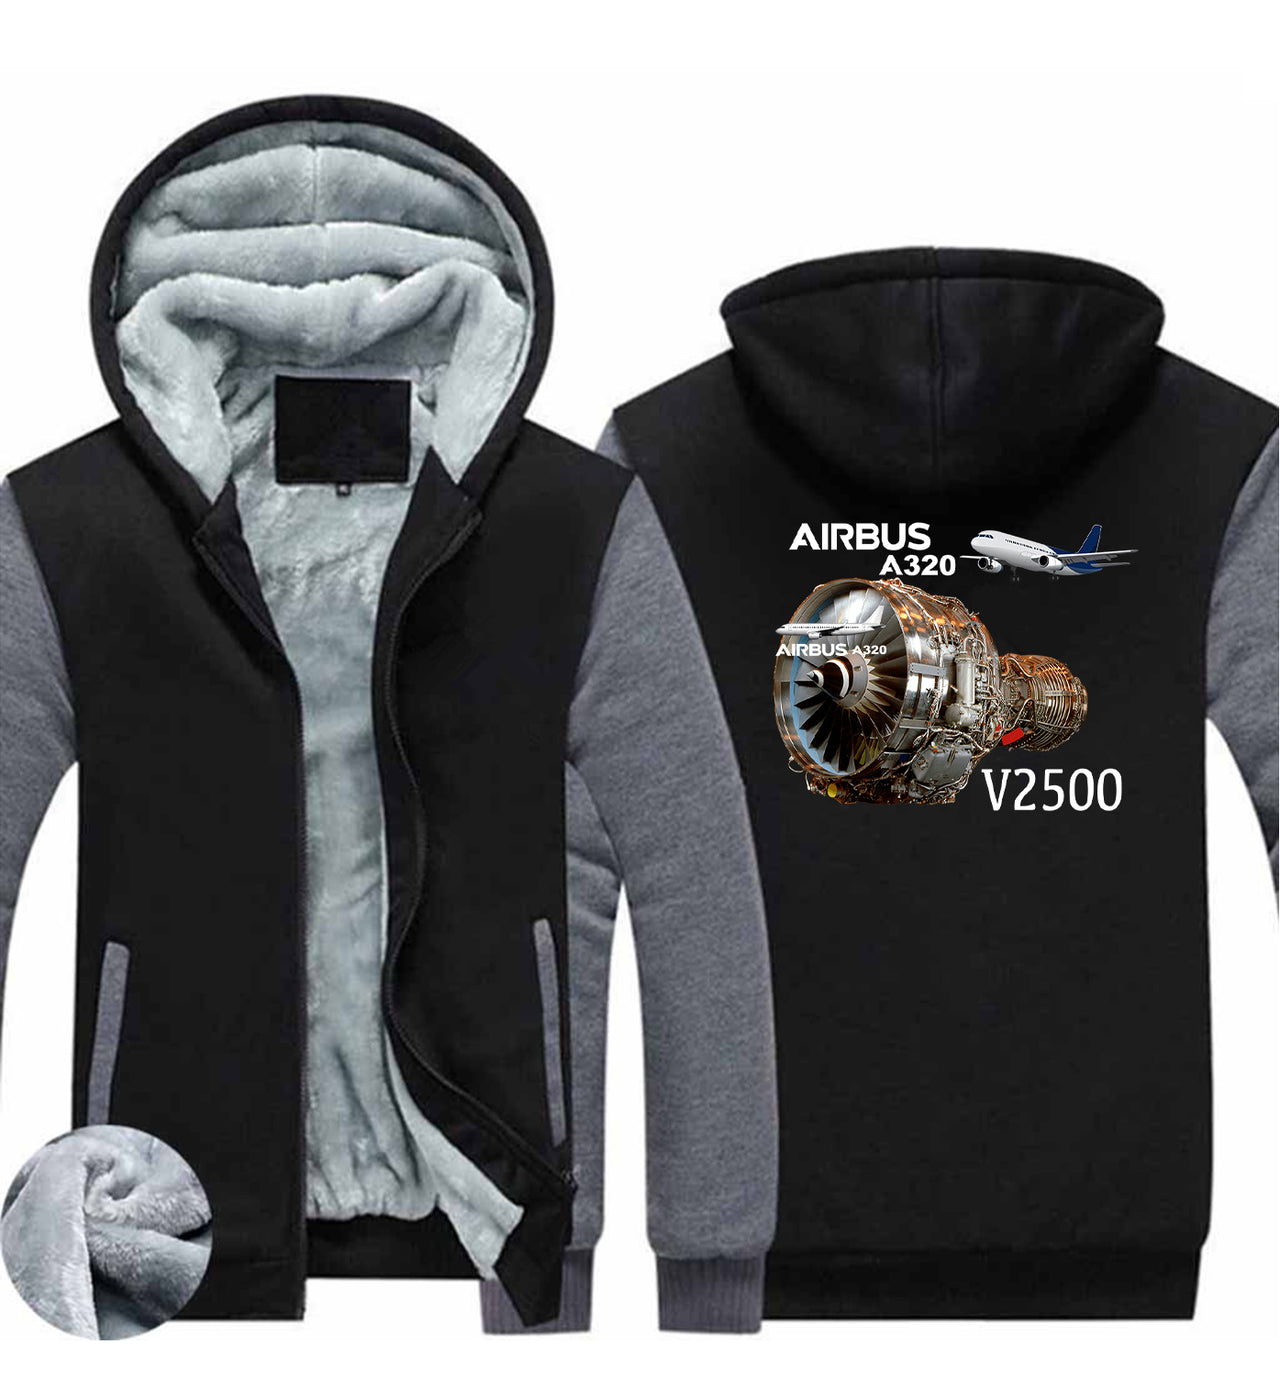 Airbus A320 & V2500 Engine Designed Zipped Sweatshirts